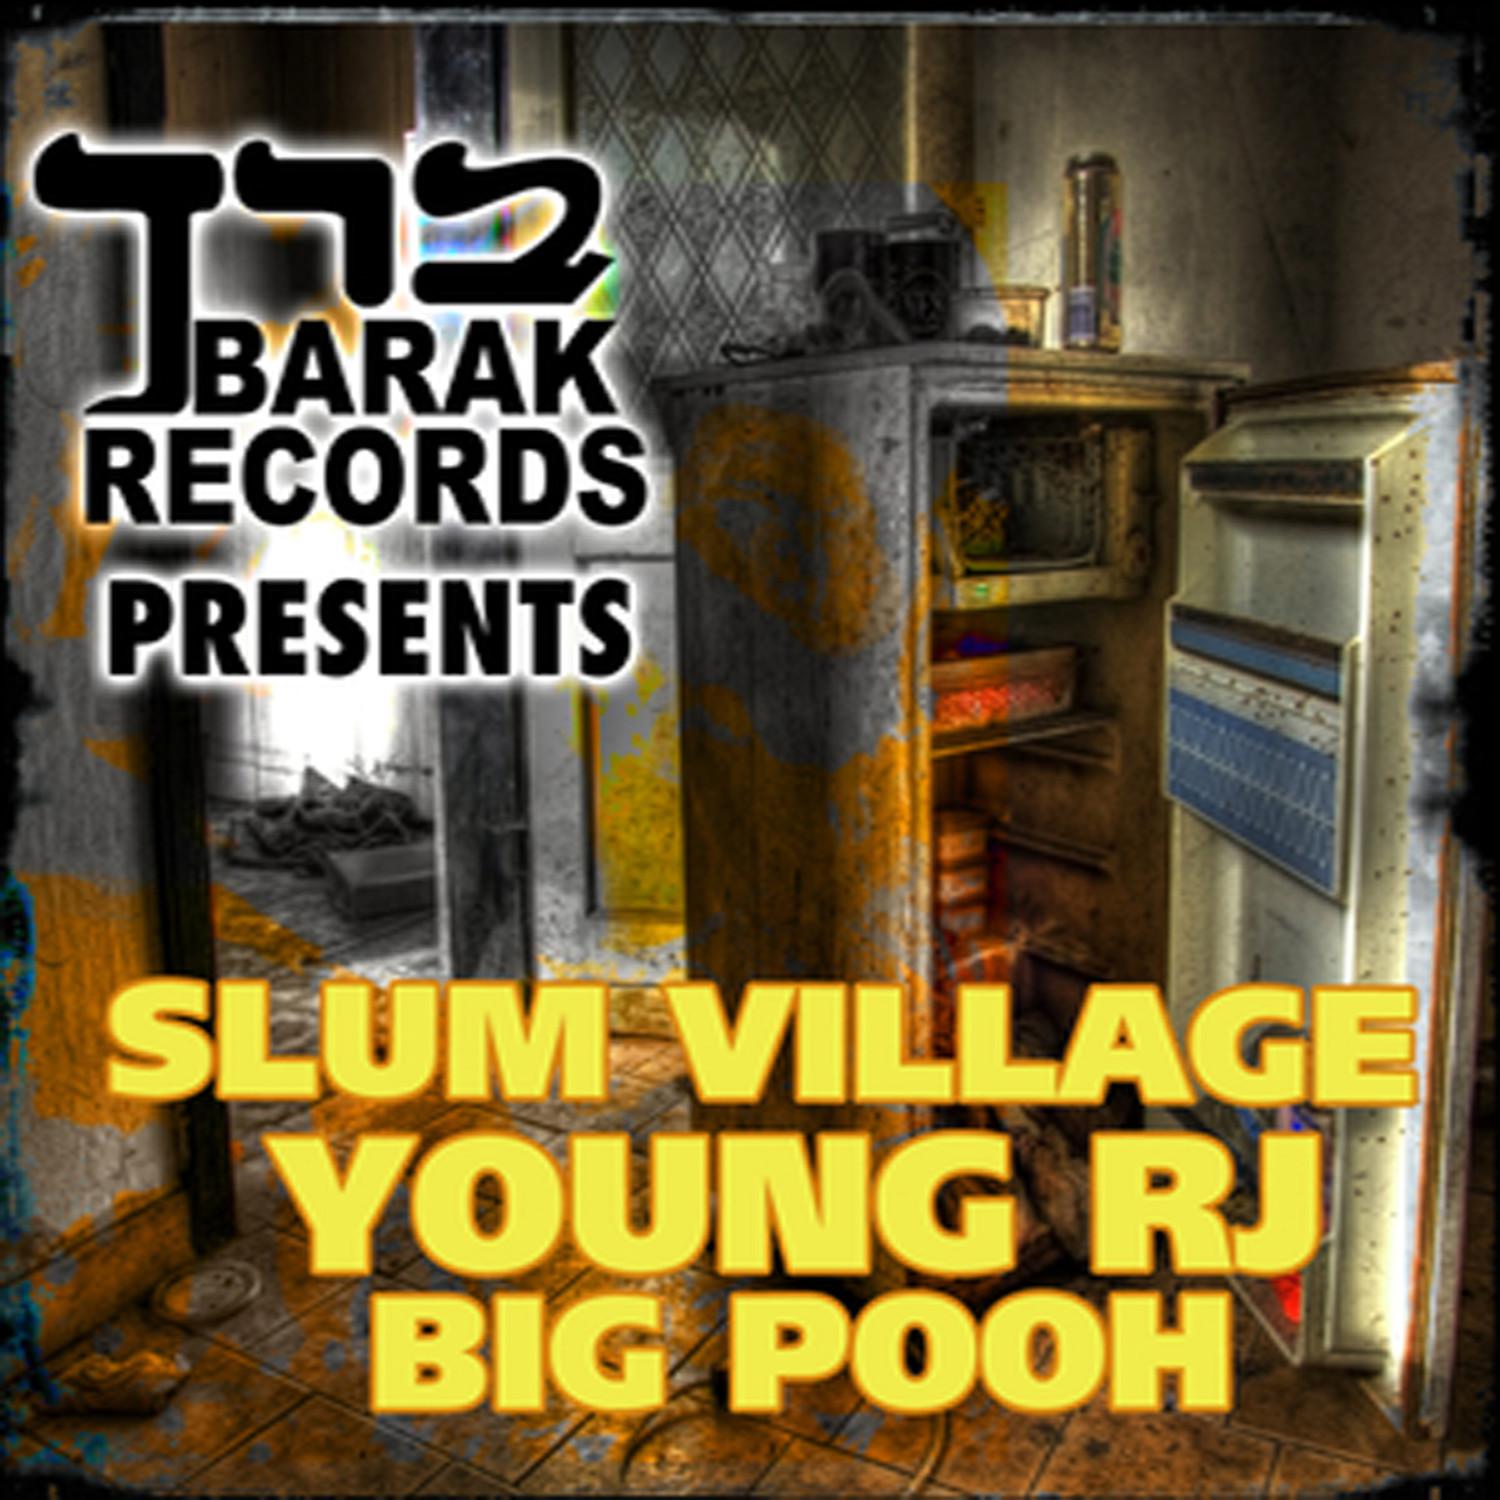 Barak Records Presents Slum Village & Big Pooh - EP